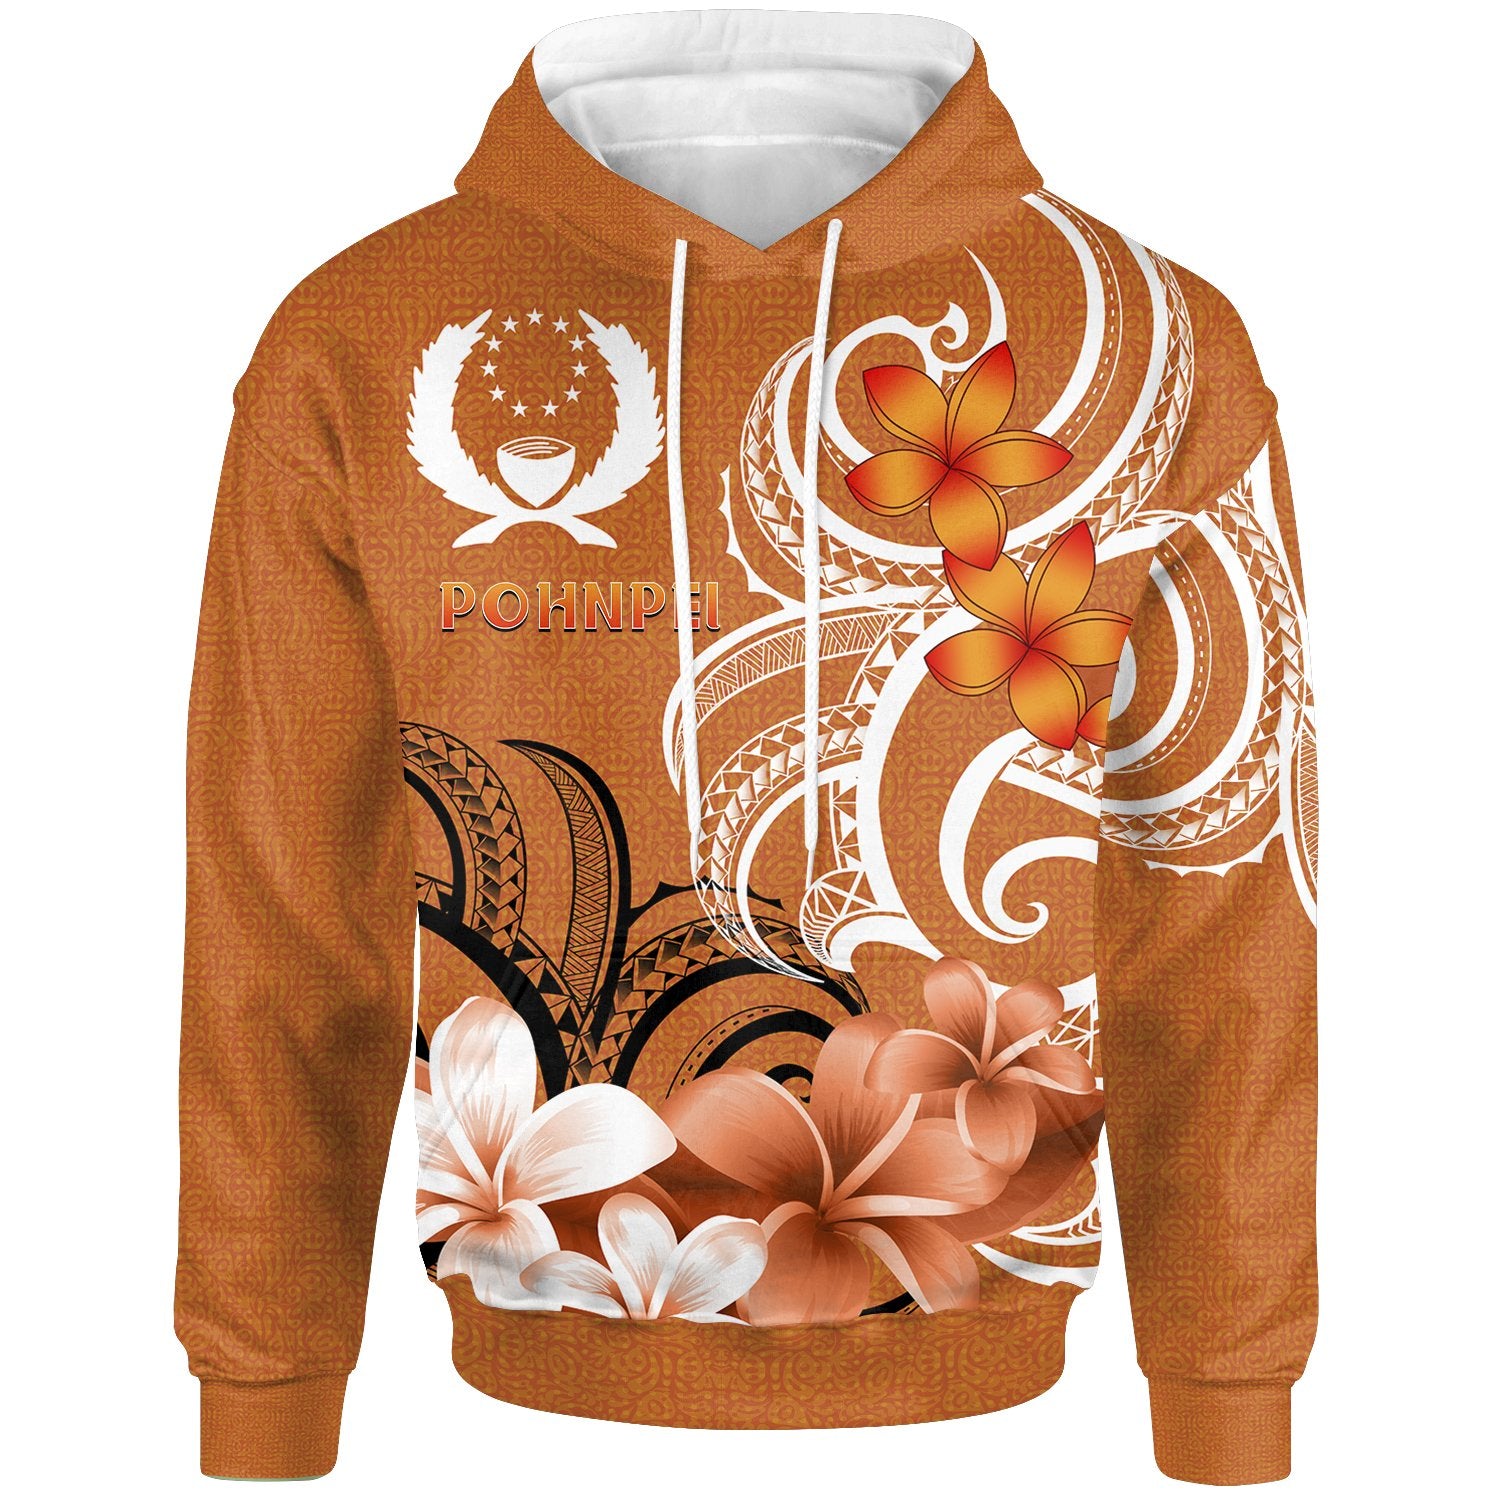 Pohpei Hoodie Pohnpei Spirit Unisex Orange - Polynesian Pride